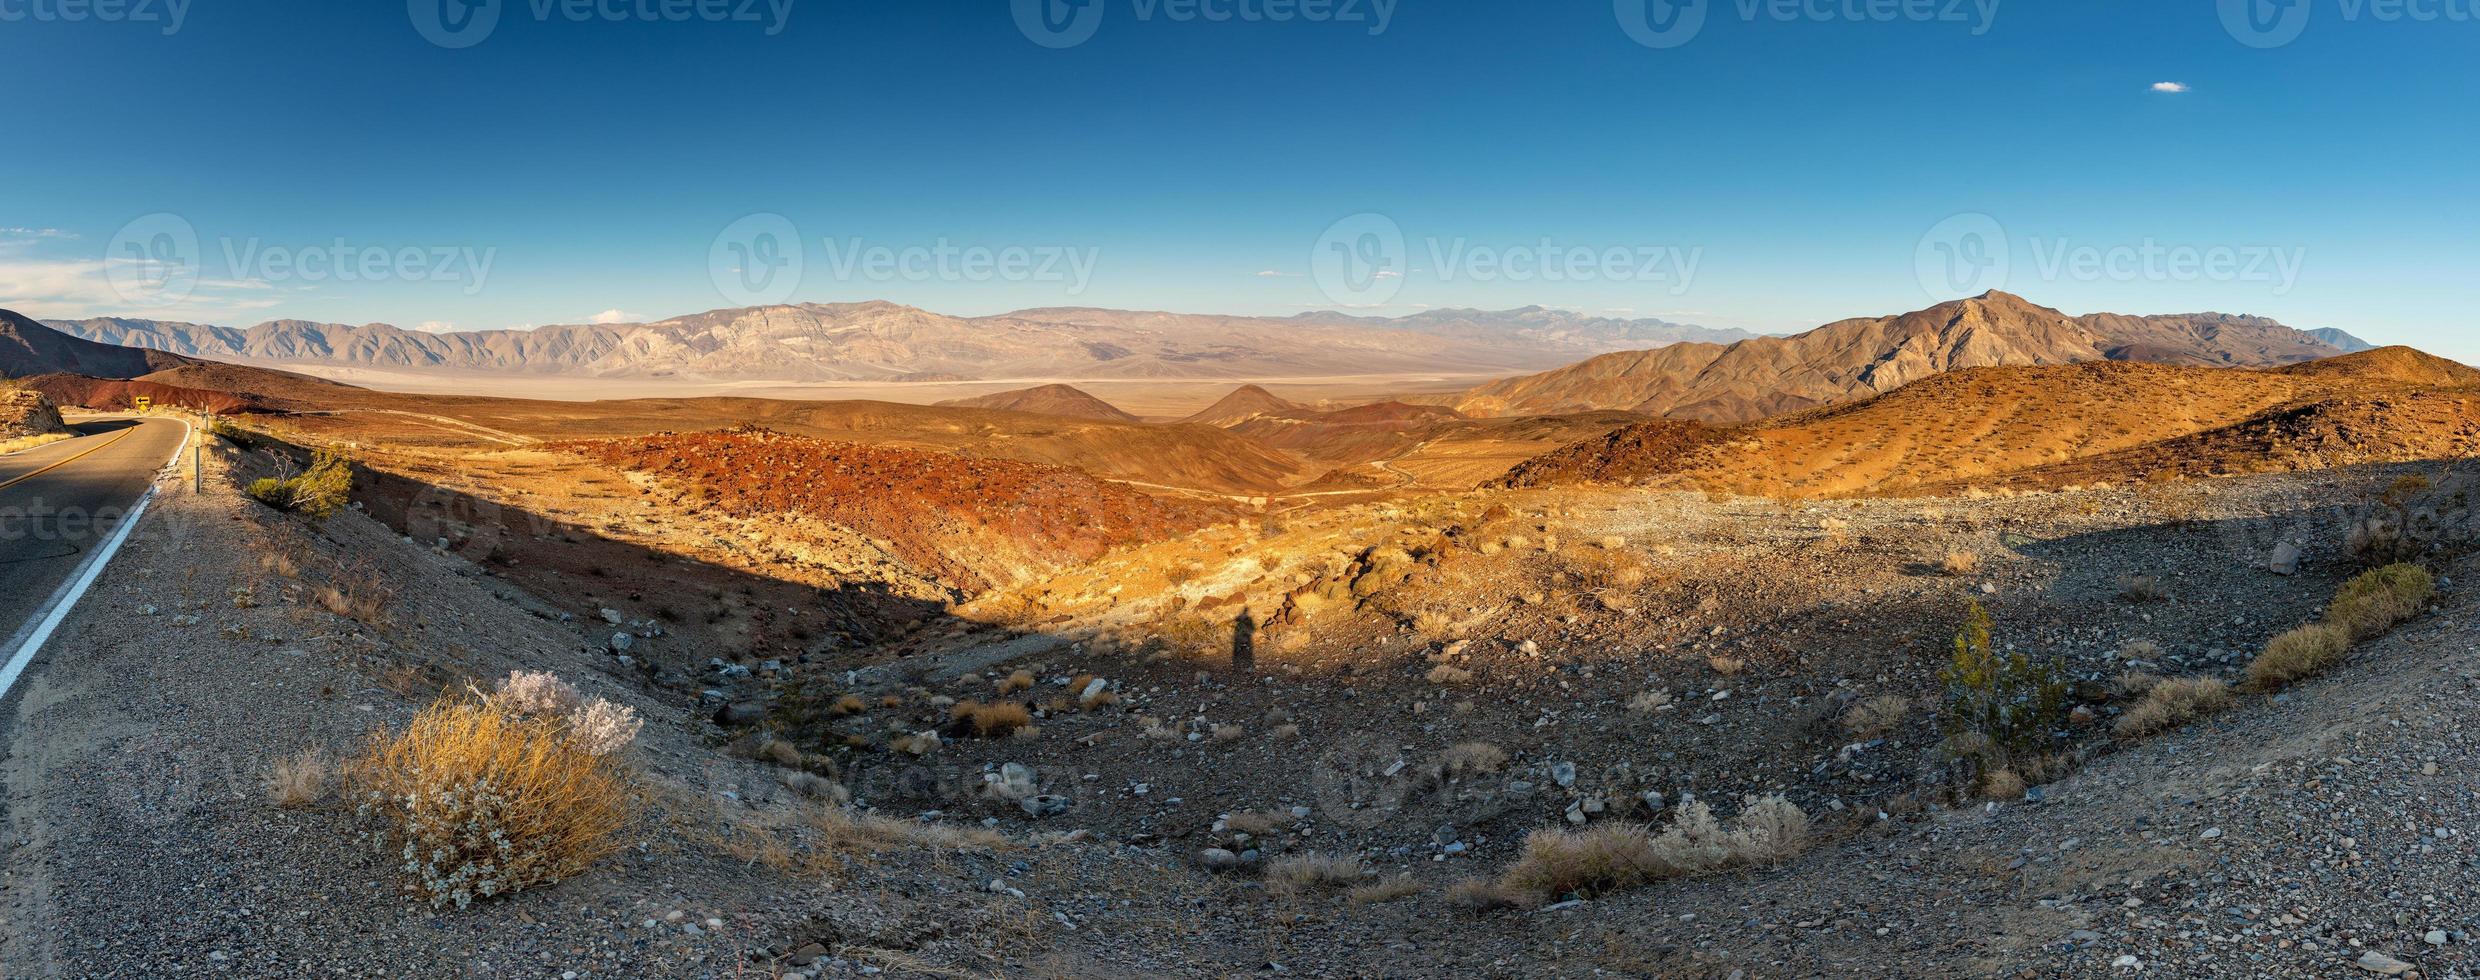 dood vallei zabriskie punt zonsondergang landschap foto